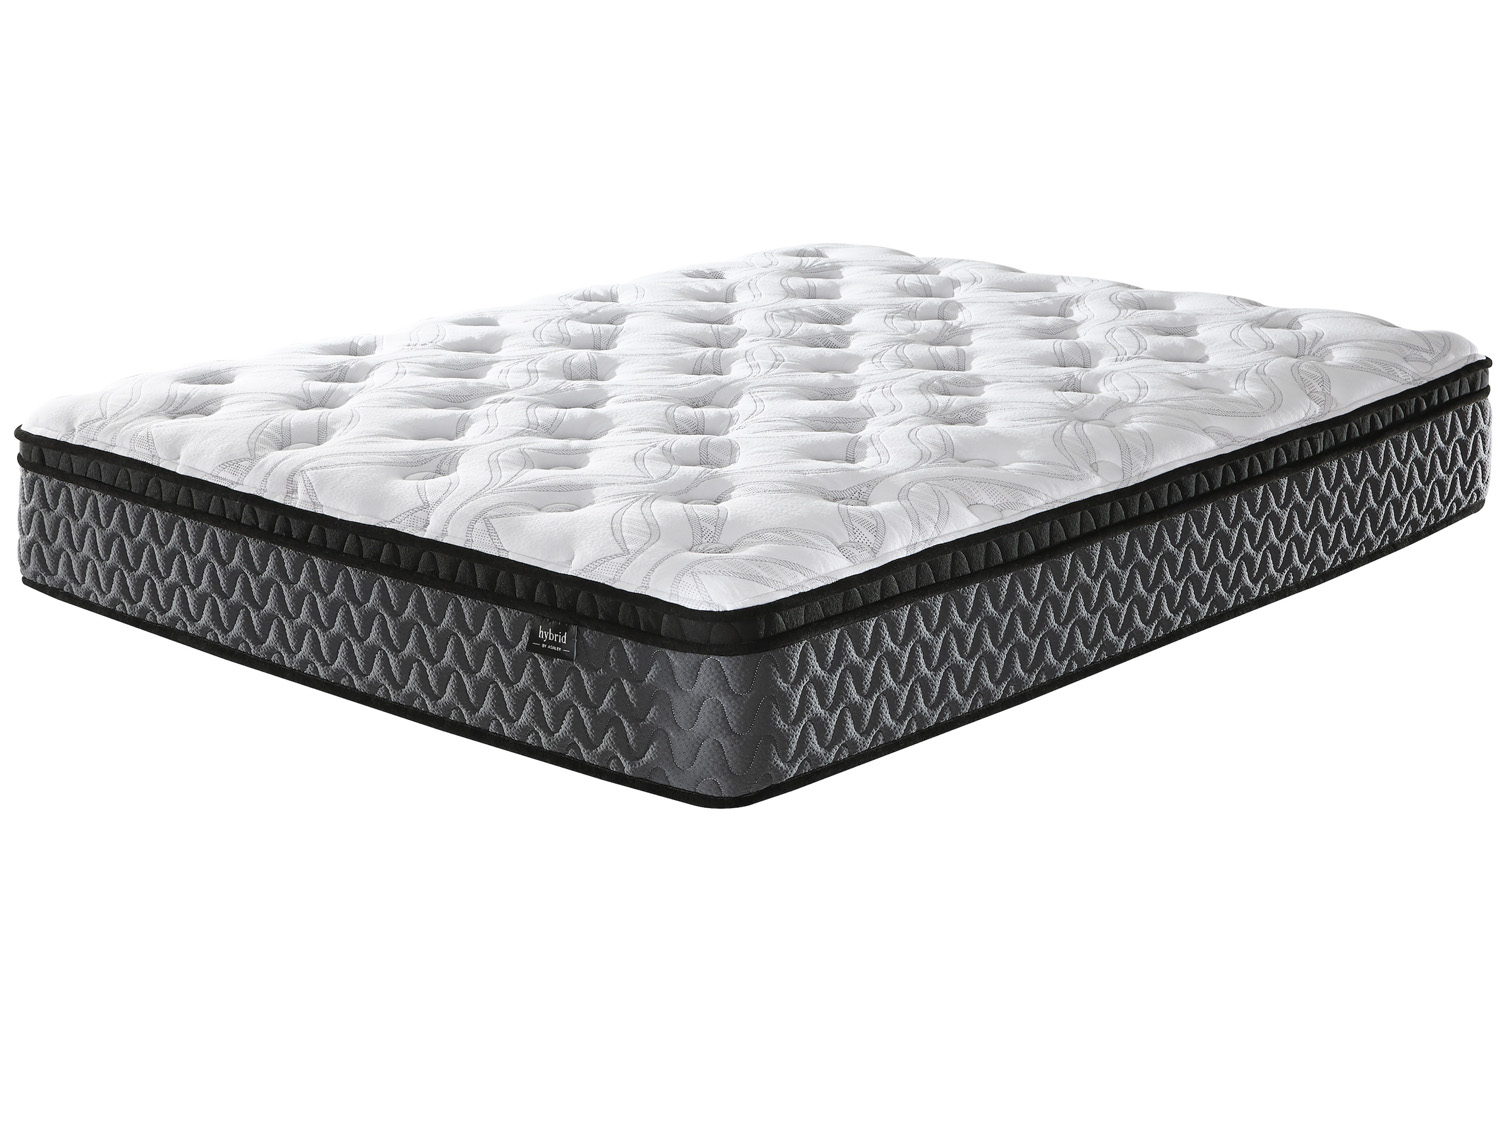 1ashley 0 inch hybrid queen mattress review